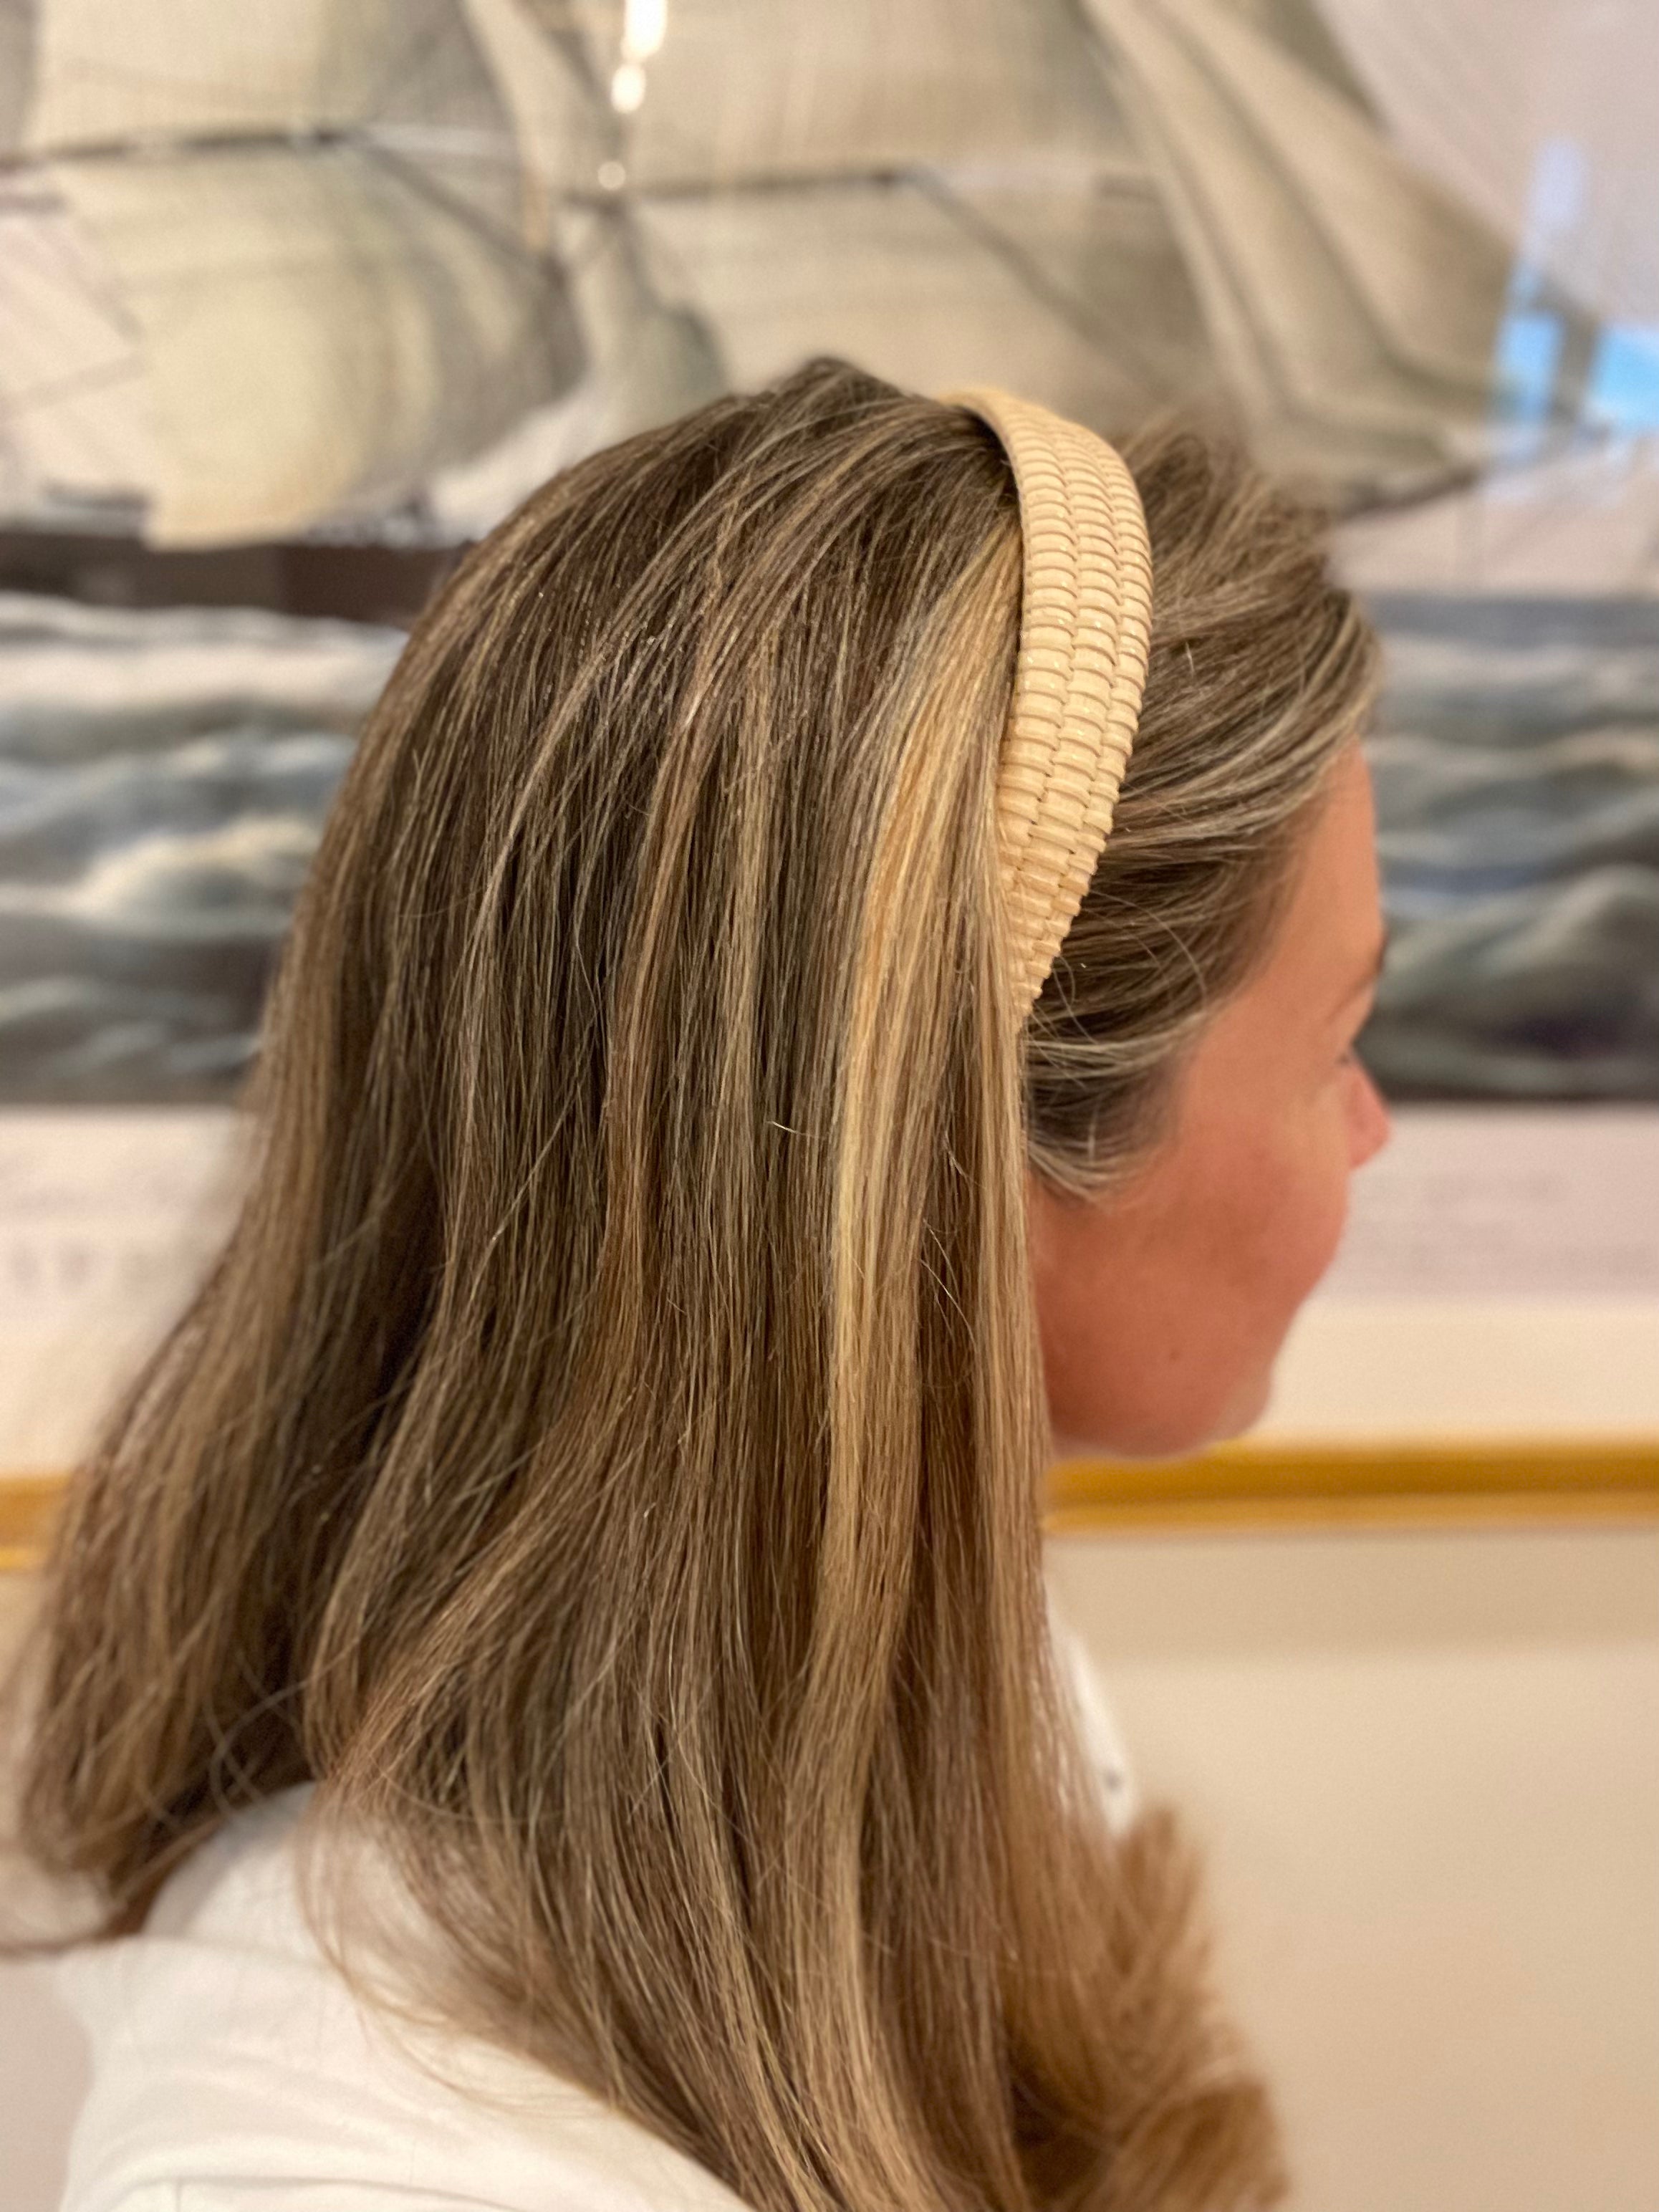 1” width headband